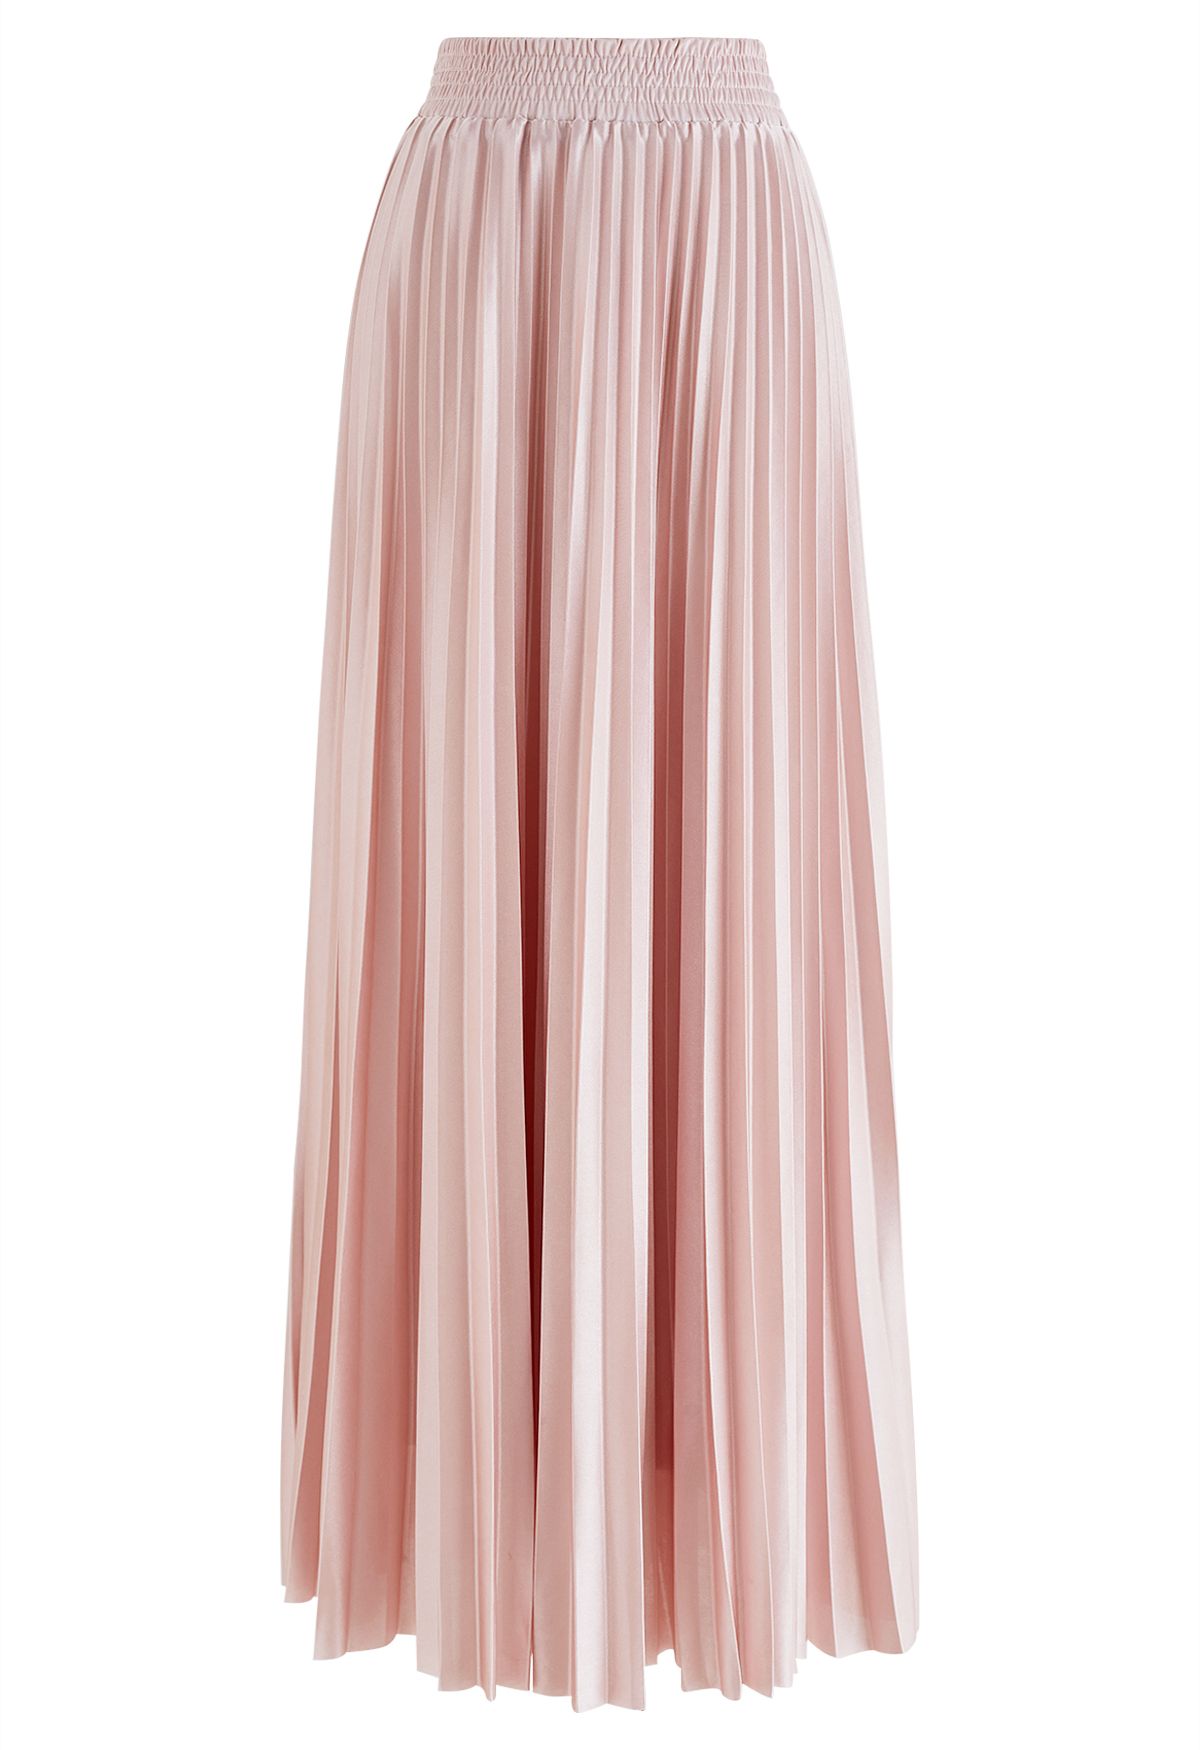 Jupe longue plissée brillante en rose nude